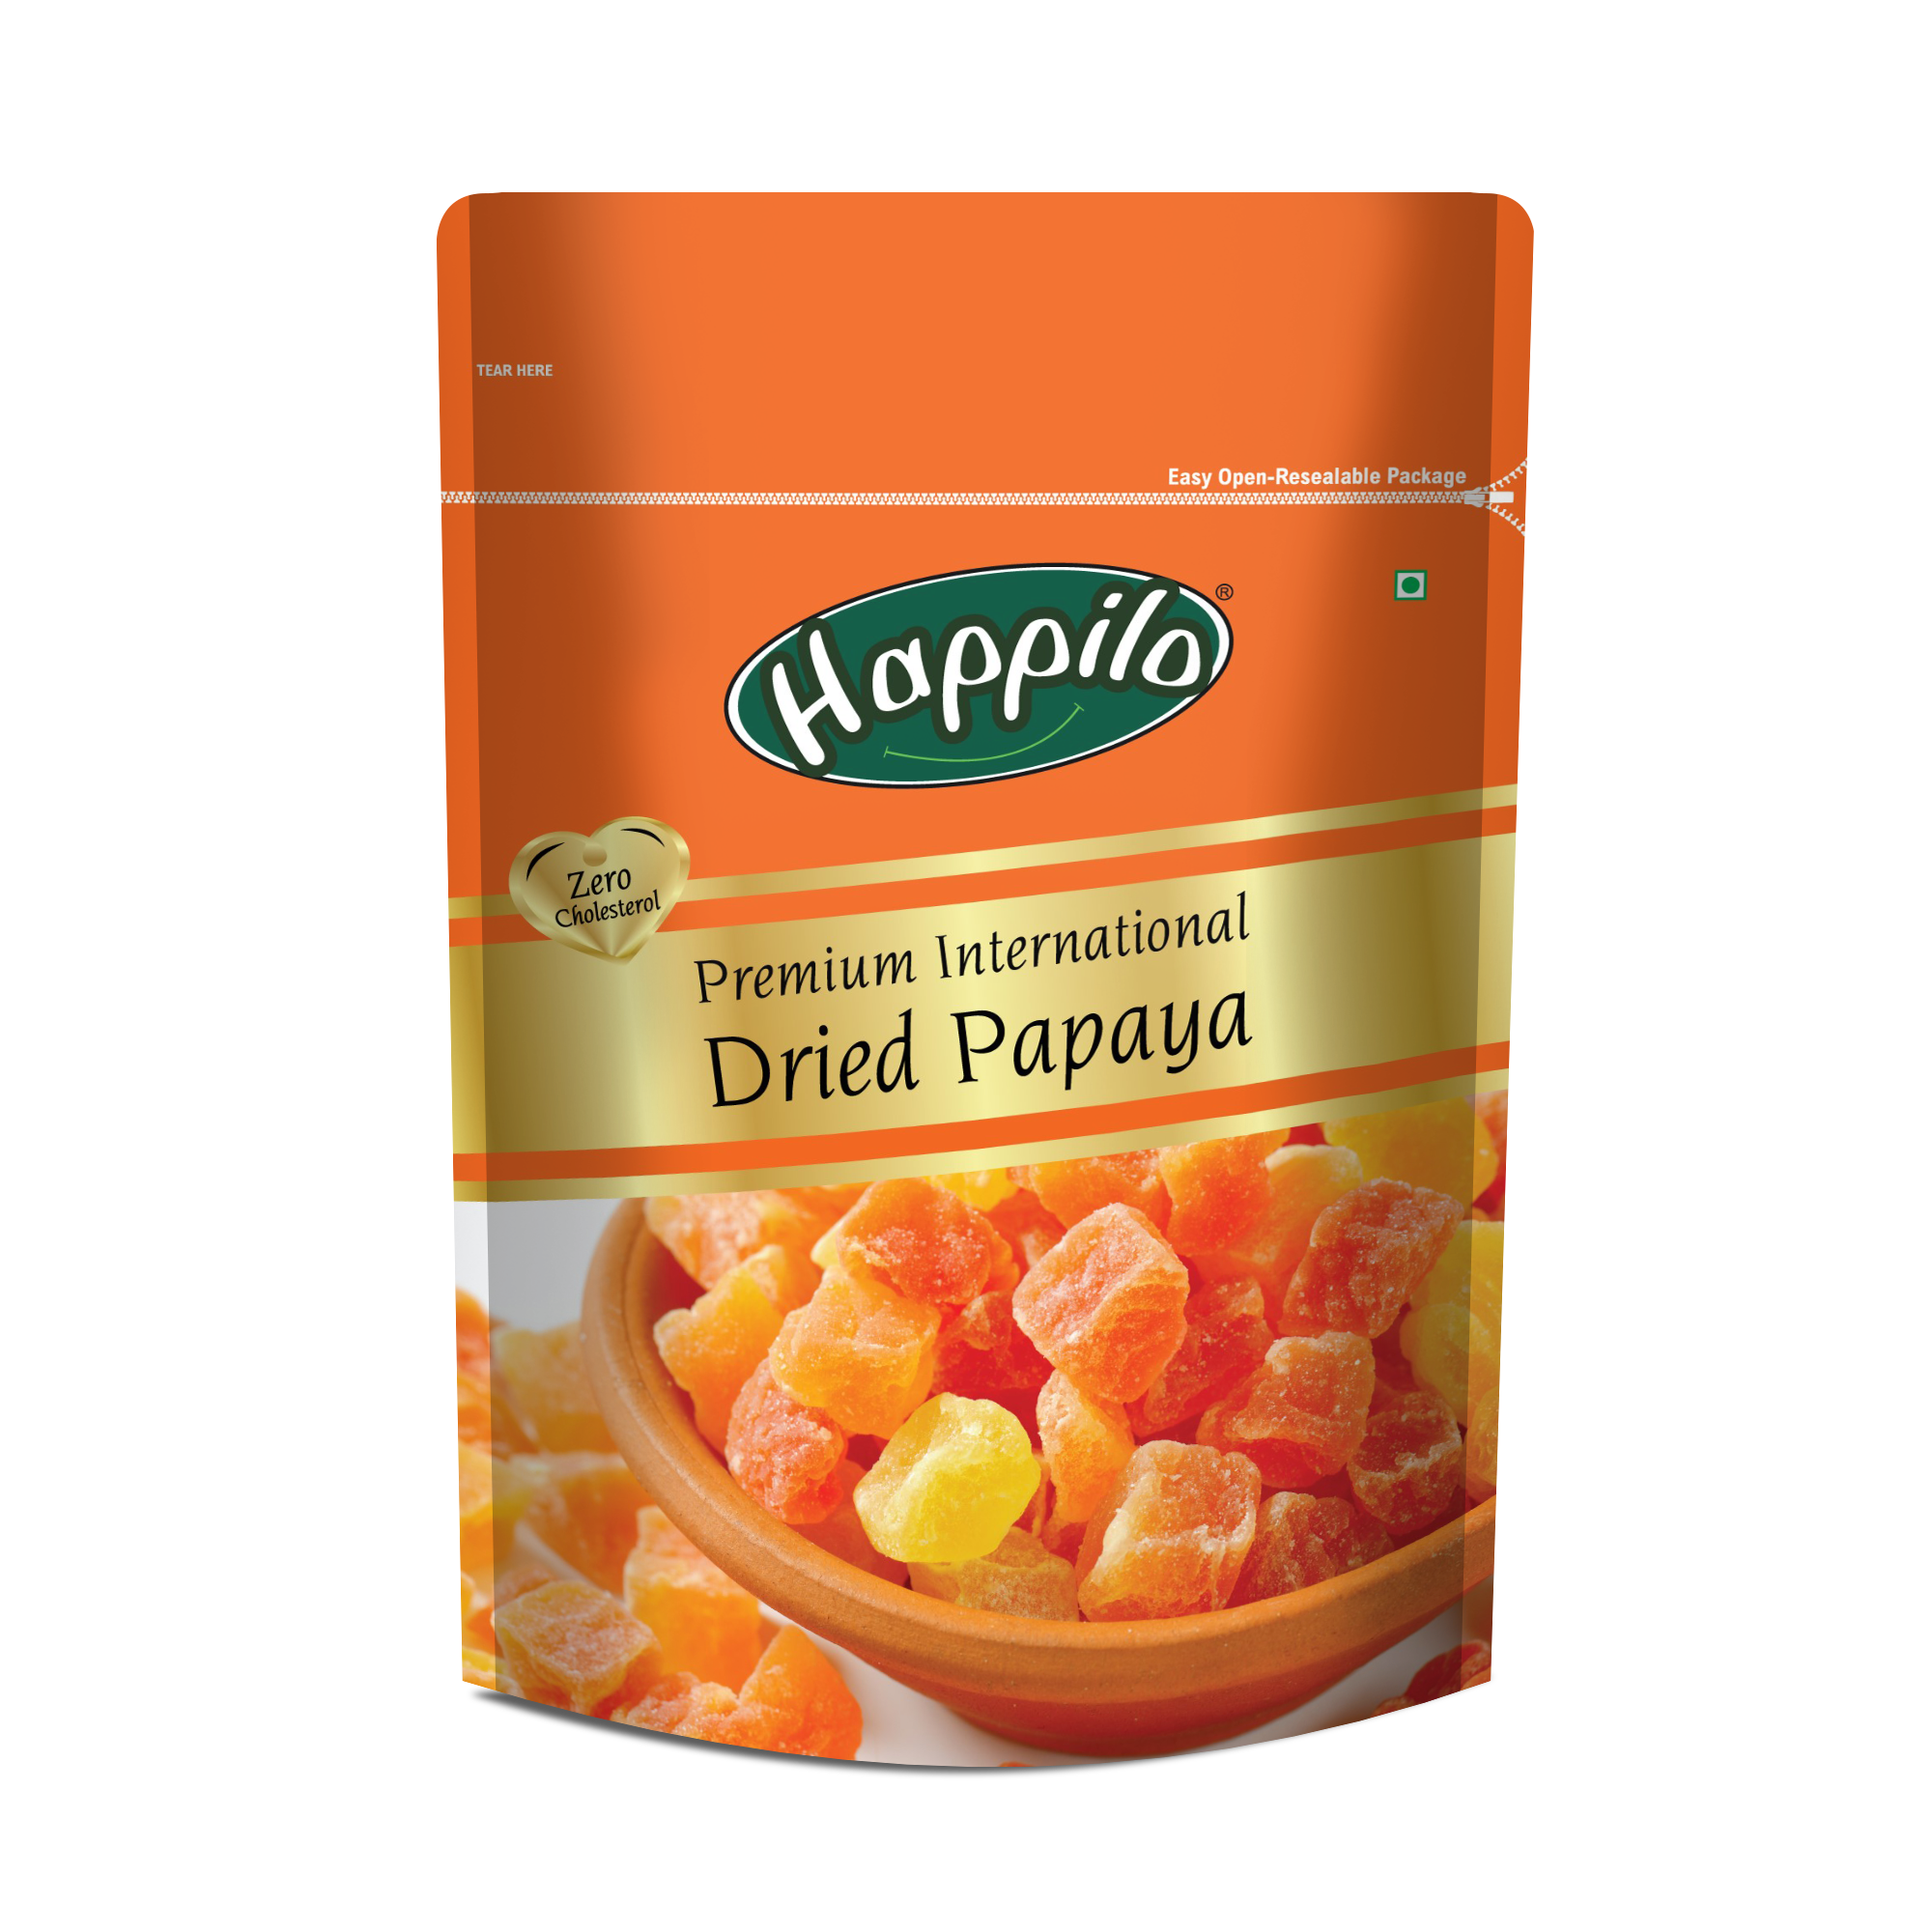 Happilo Premium International Dried Papaya